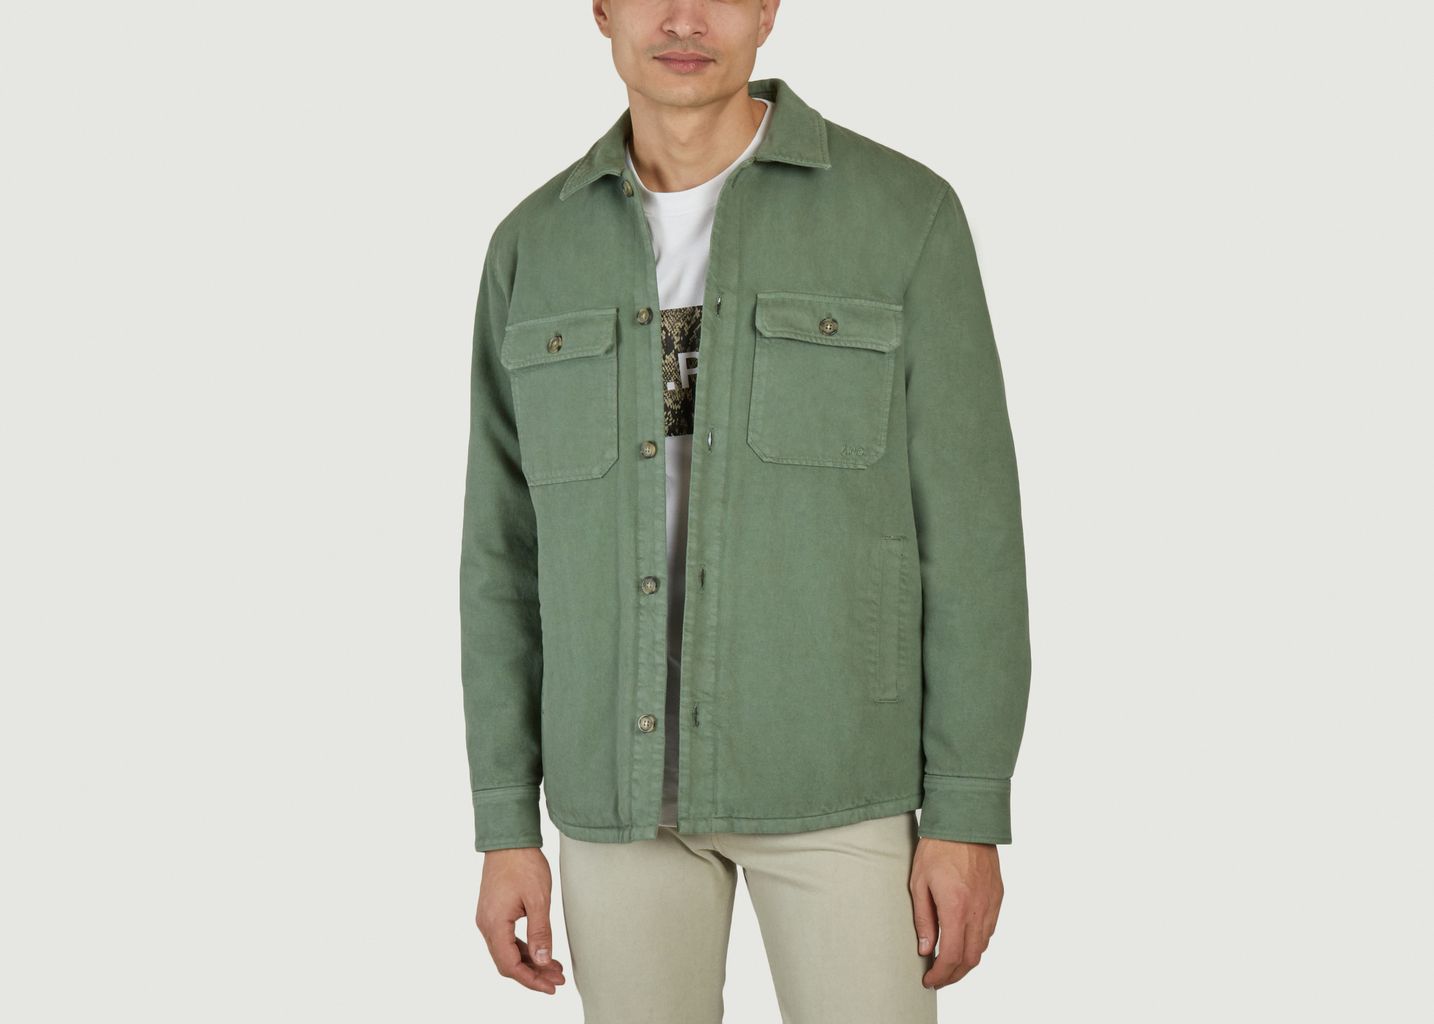 Alessio straight-cut cotton jacket - A.P.C.